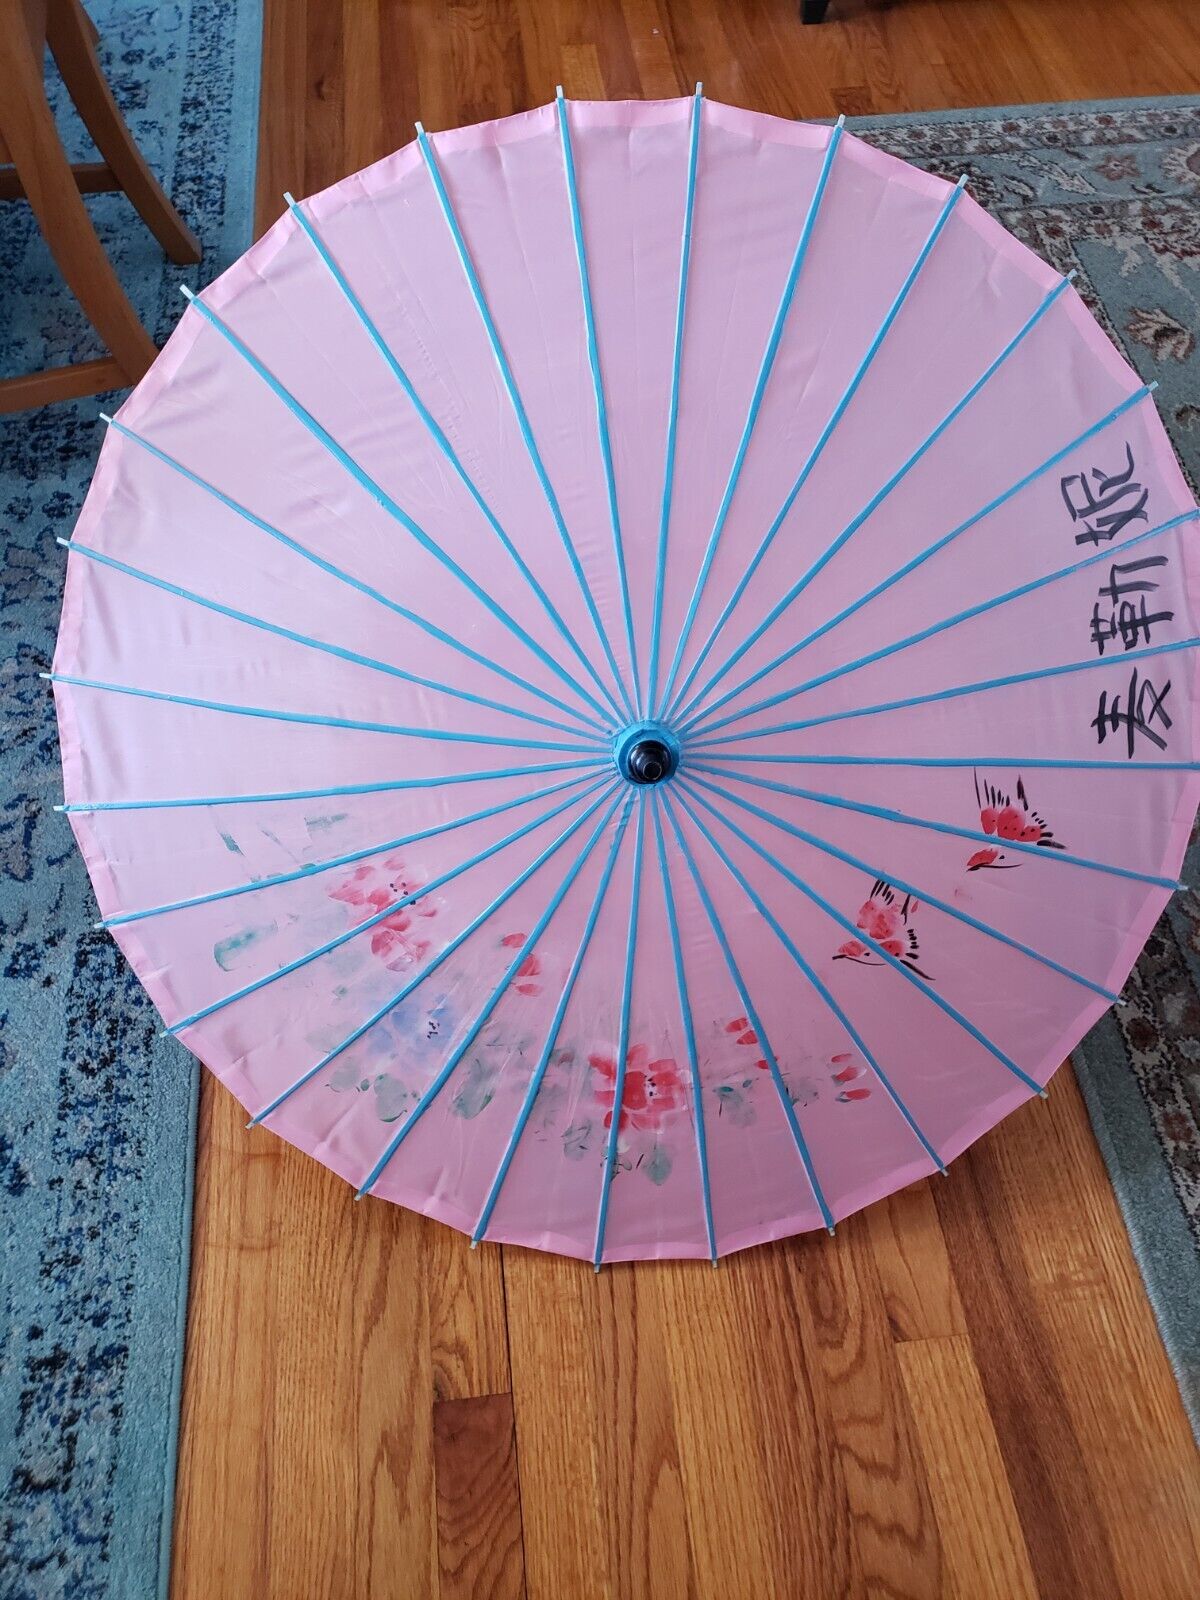 Vintage Japanese Umbrella Parasol Silk Pink Hand Painted Birds 33 Inches